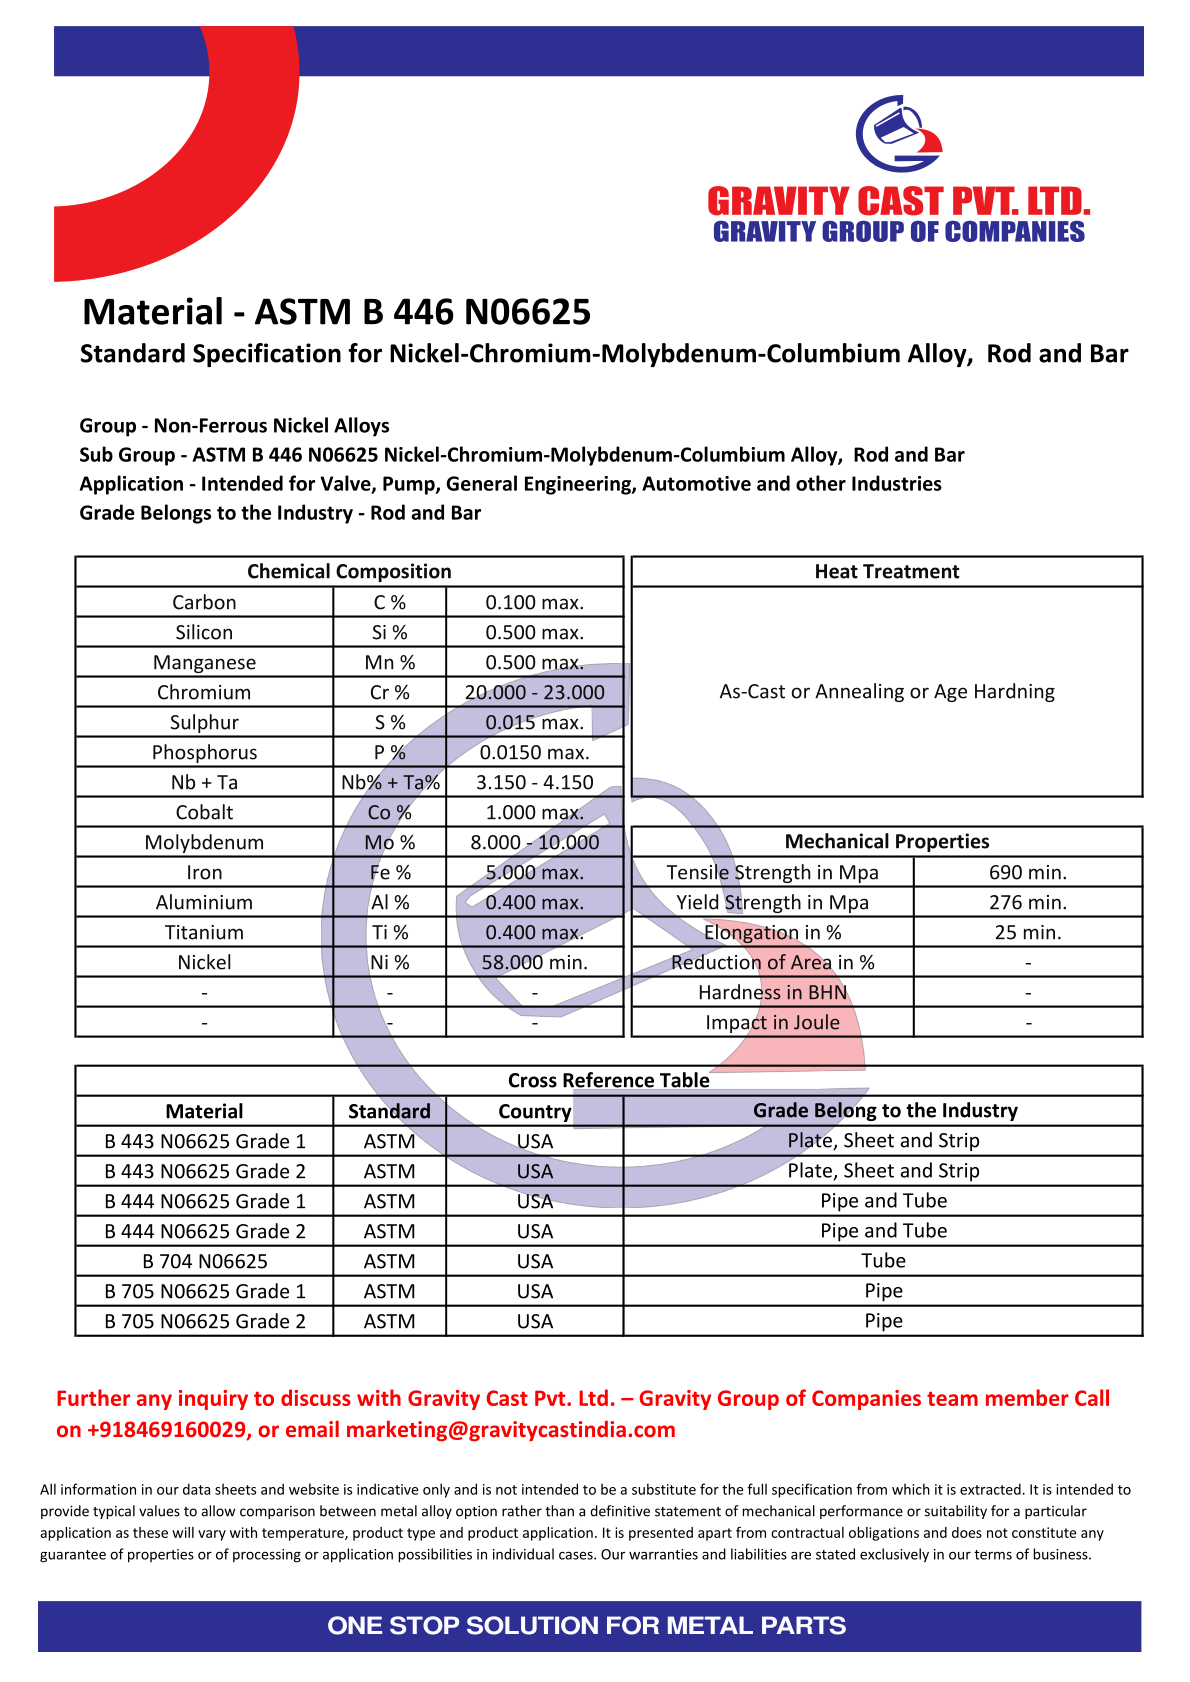 ASTM B 446 N06625.pdf